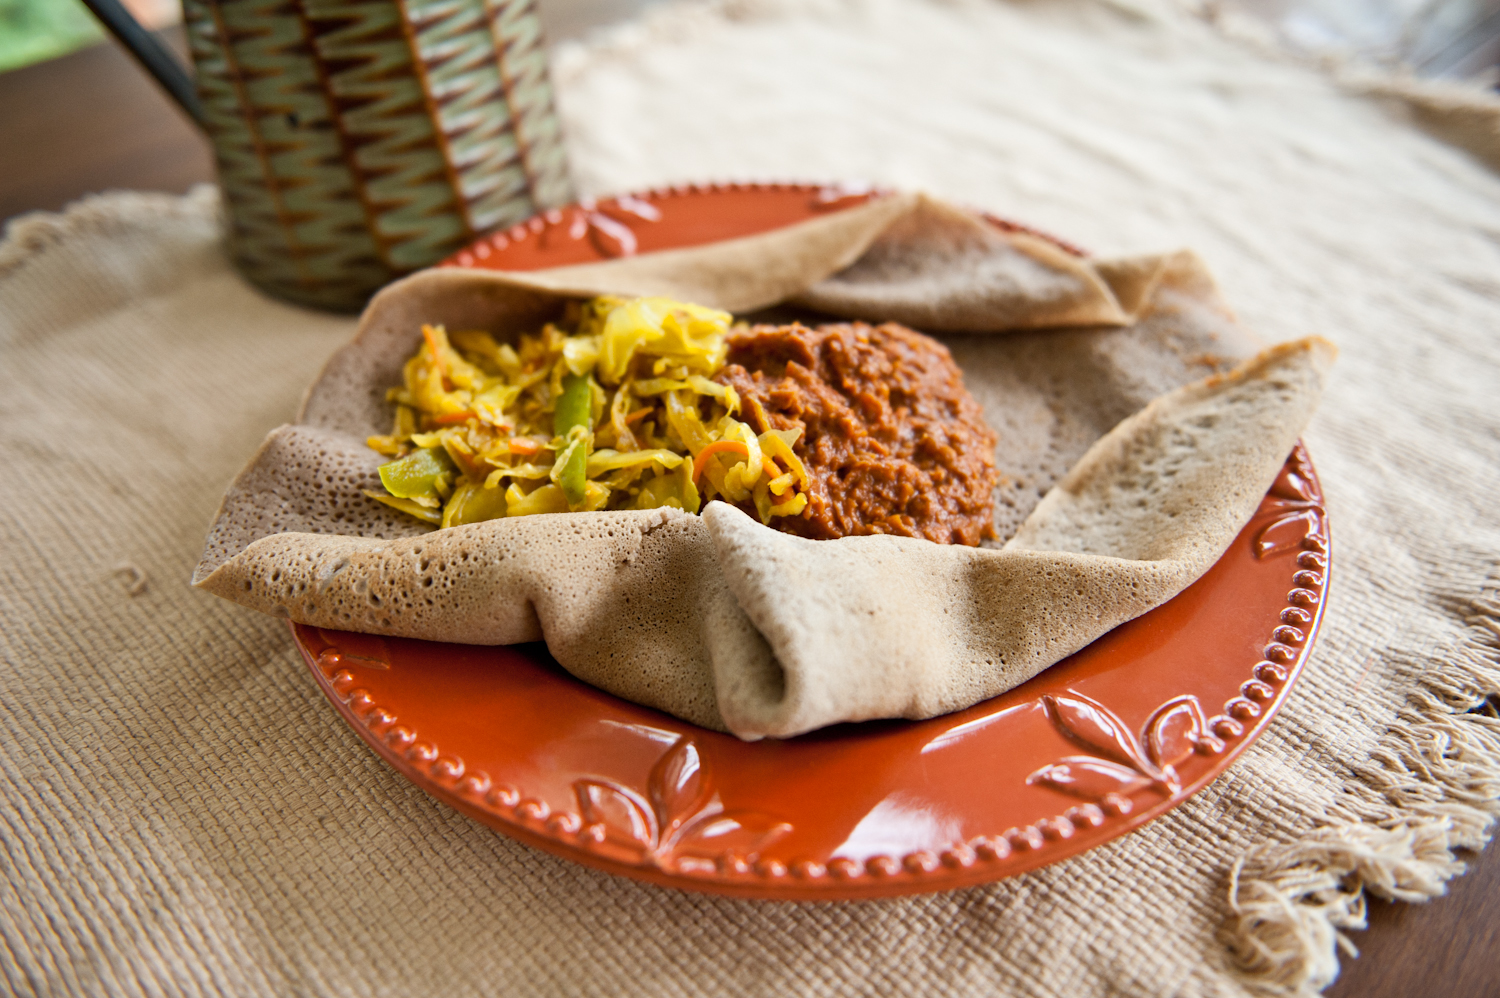 Gift box - Ethiopian Sauces and Spices Sampler — Eleni's Kitchen